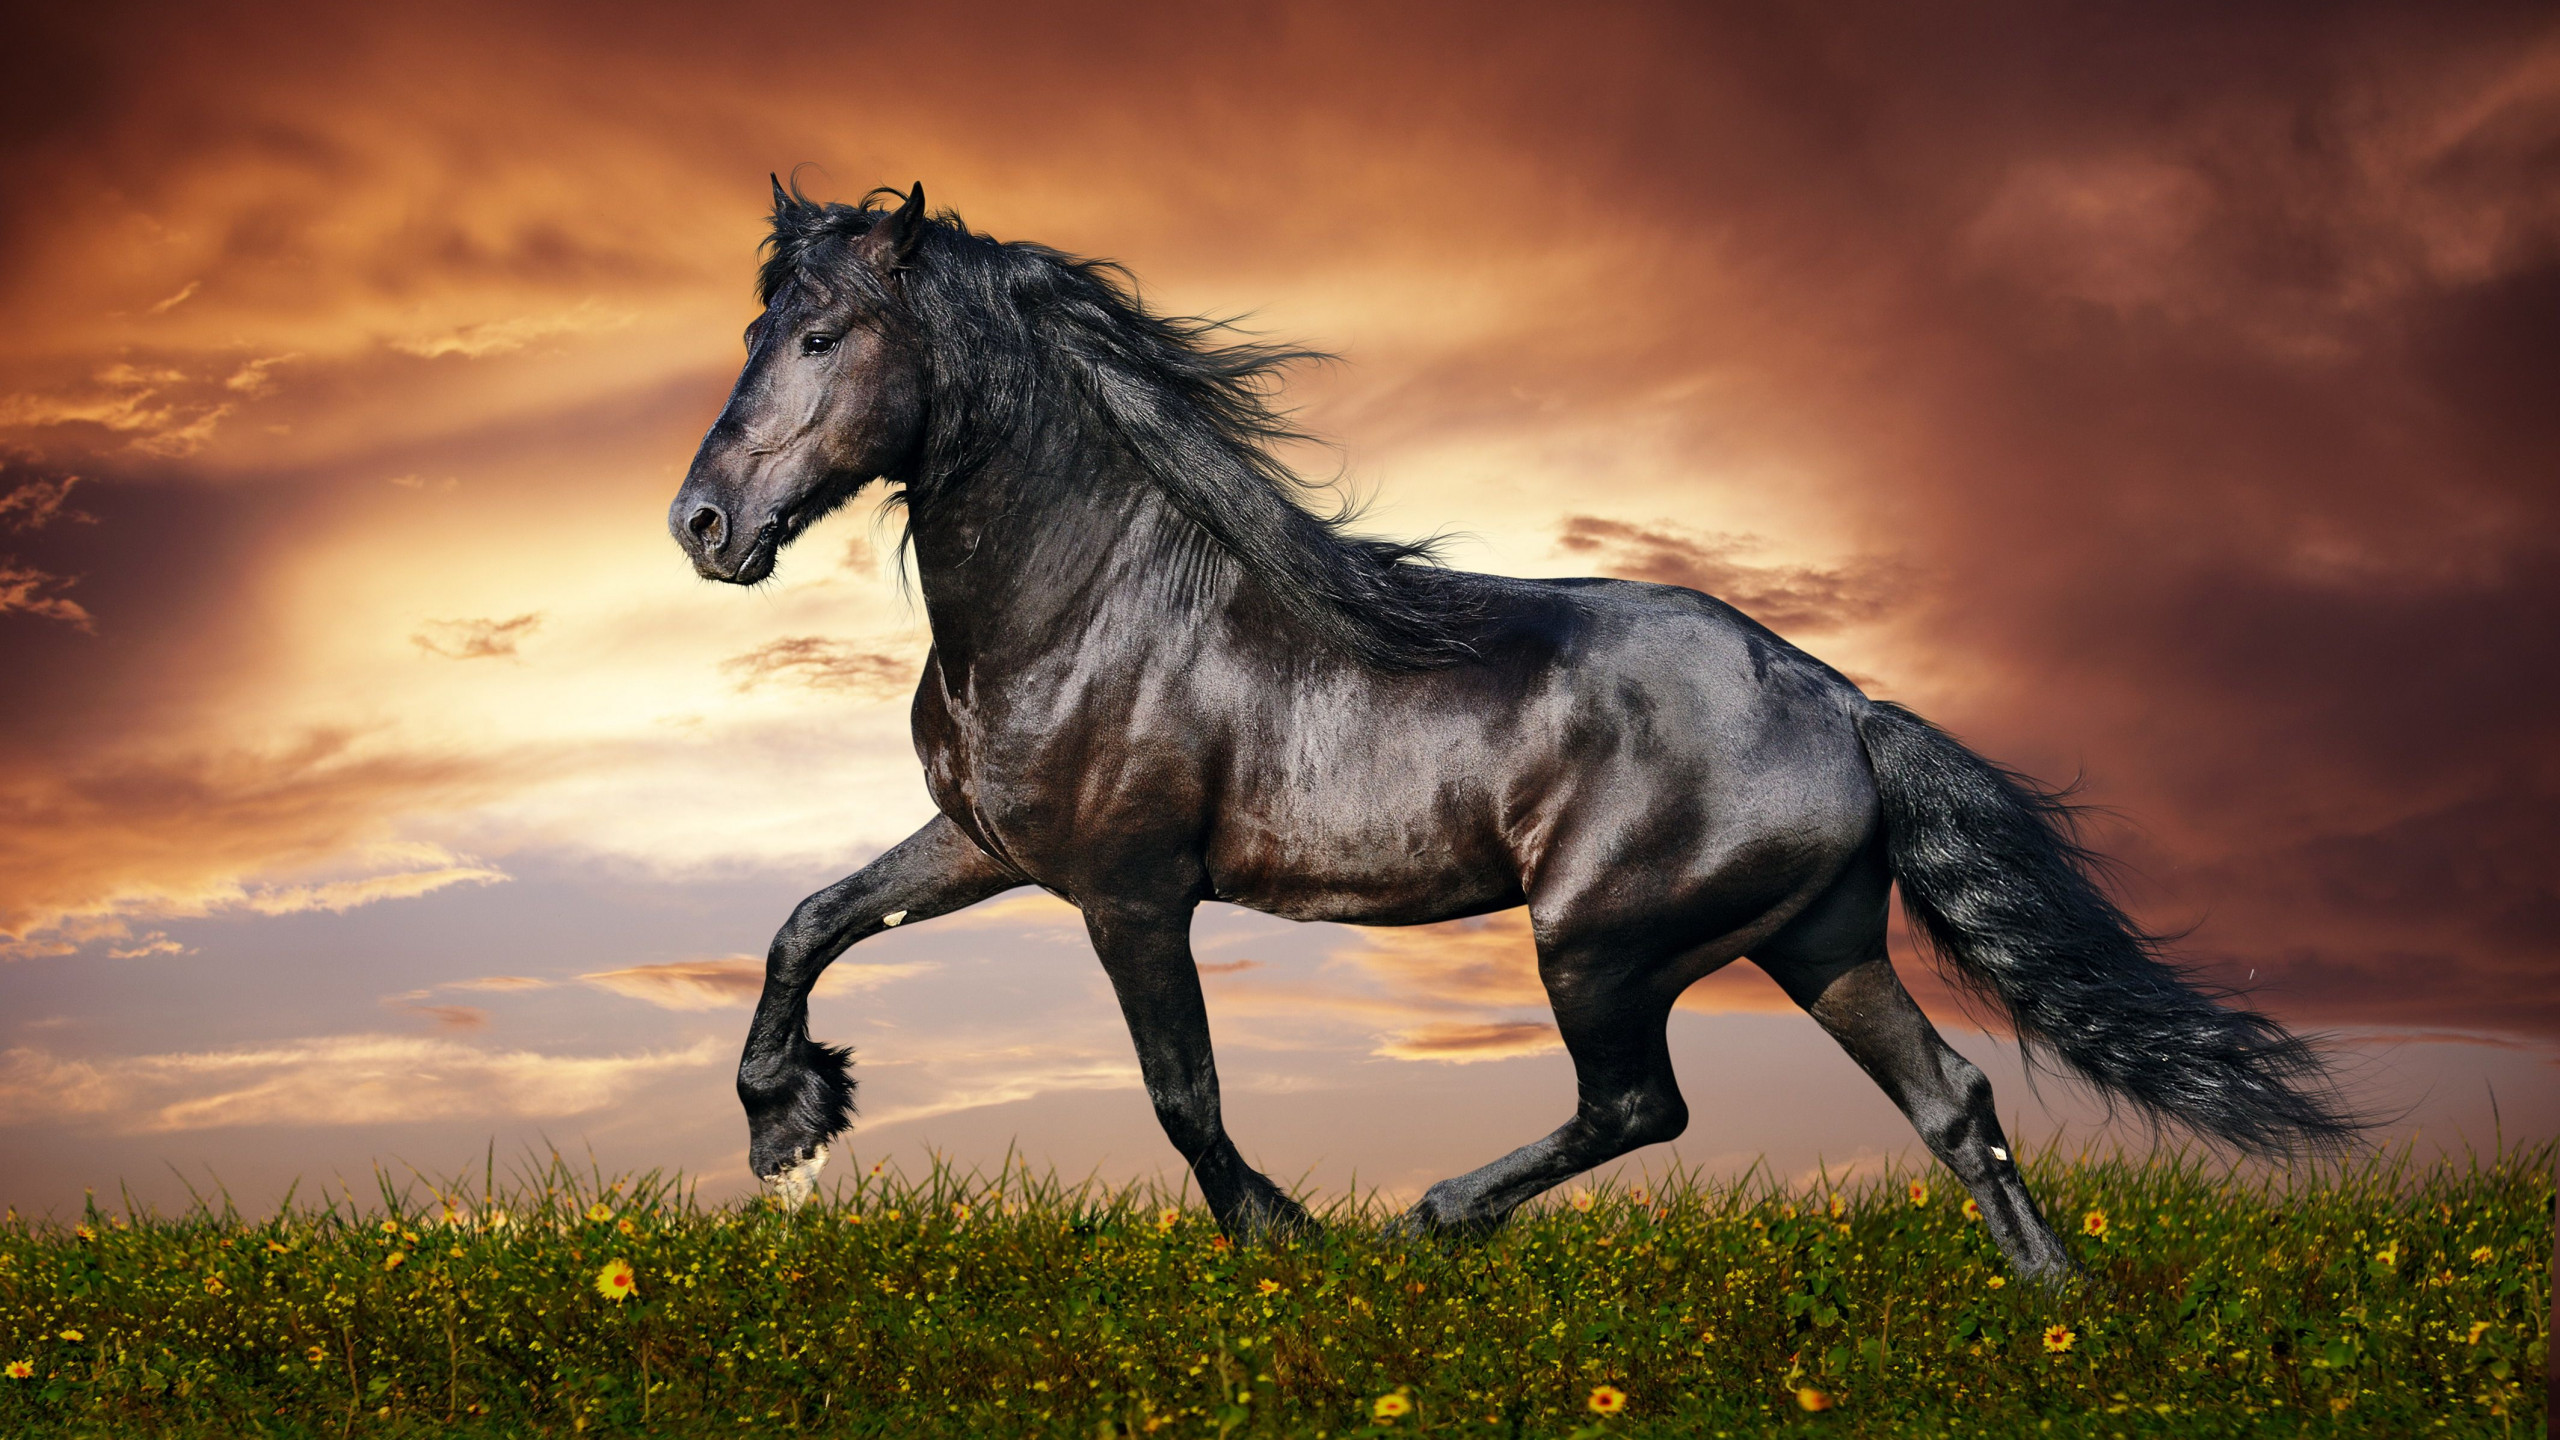 Wallpaper horse, 5k, 4k wallpaper, hooves, mane, galloping, black, sunset,  green grass, sky, clouds, OS #1531